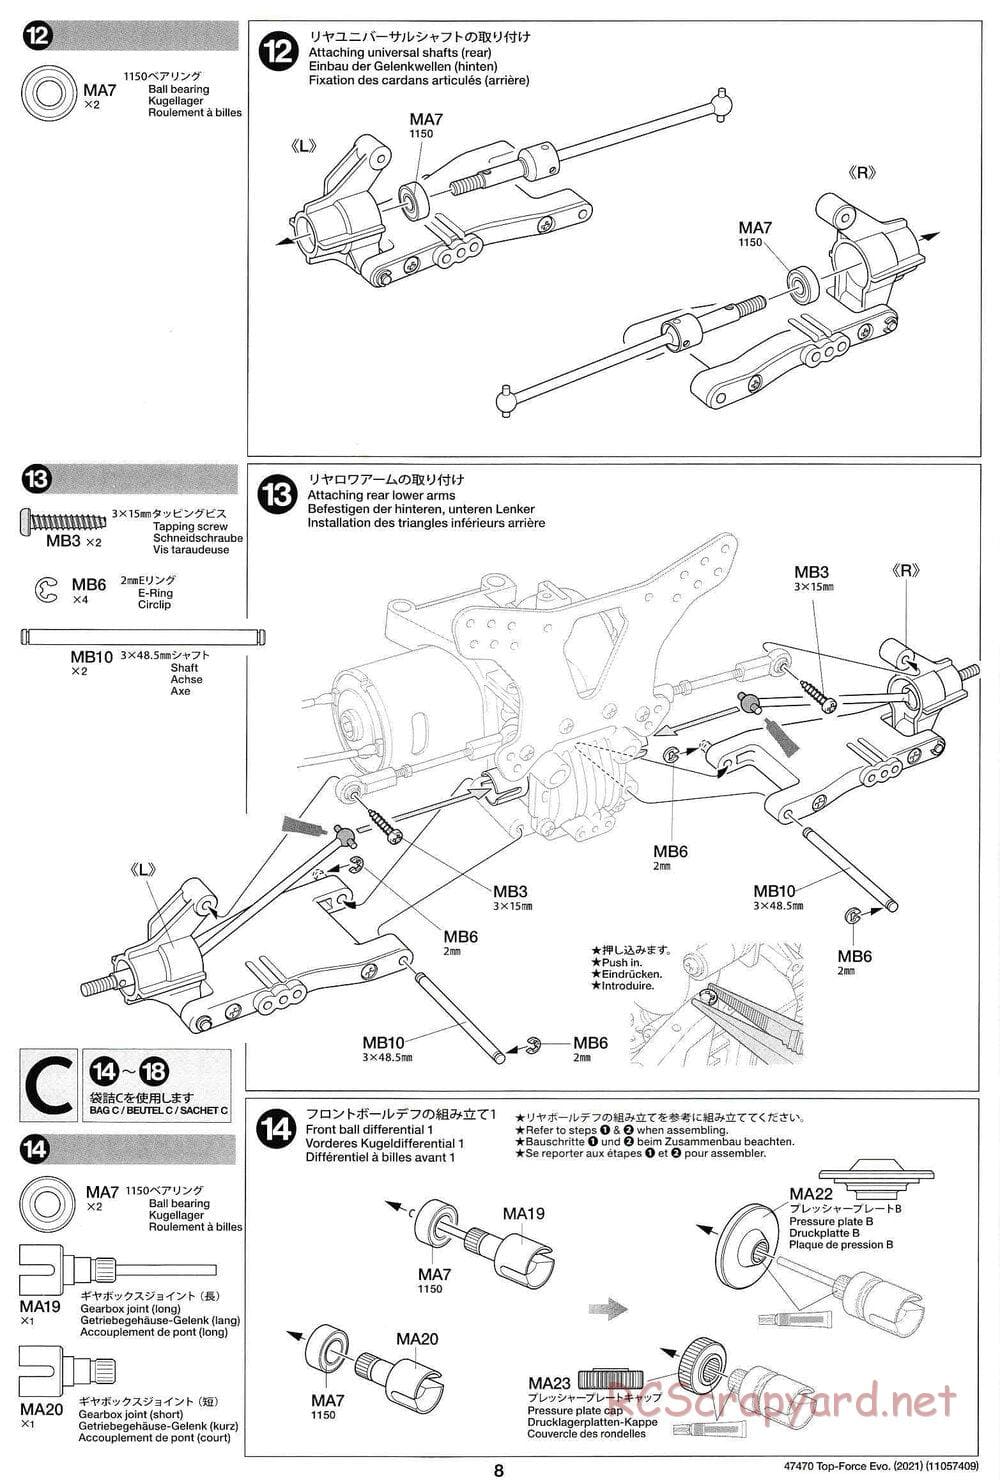 Tamiya - Top Force Evo 2021 - DF-01 Chassis - Manual - Page 8